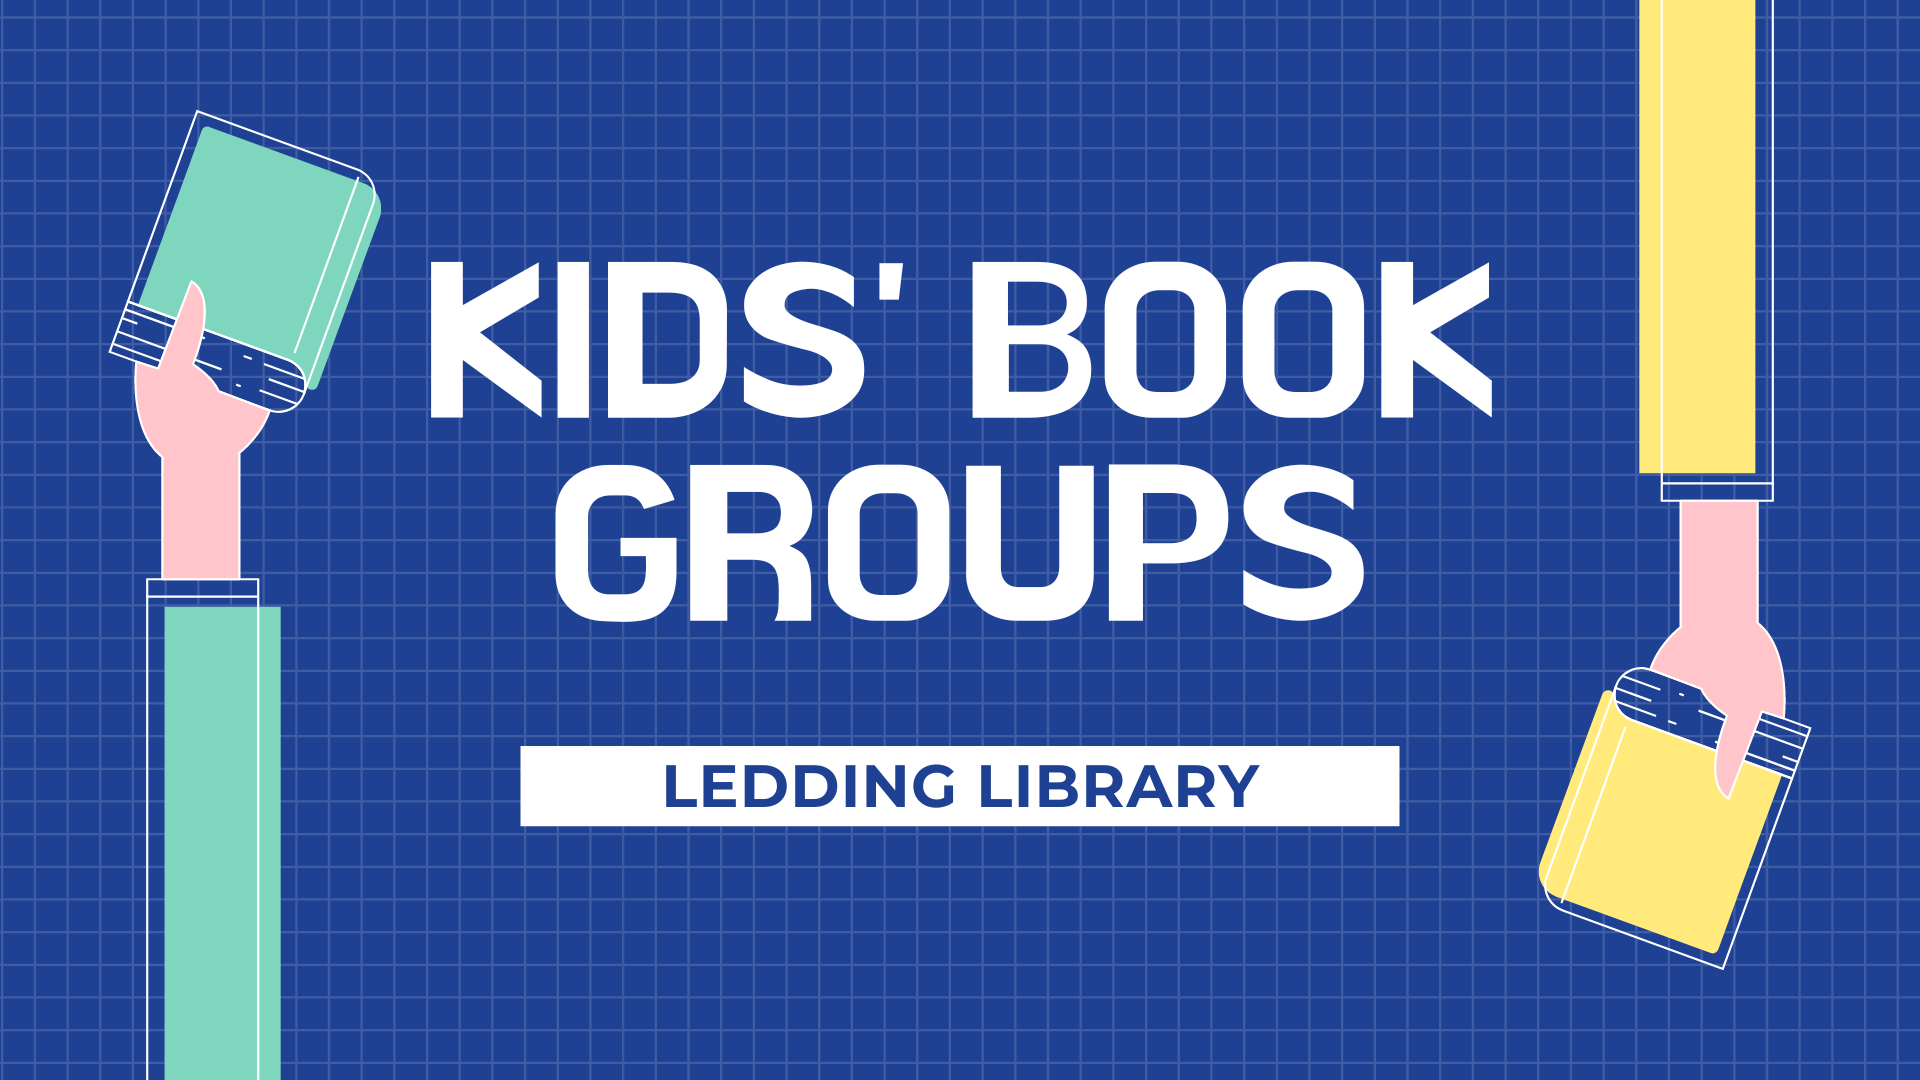 Kids' Book Groups Ledding Library